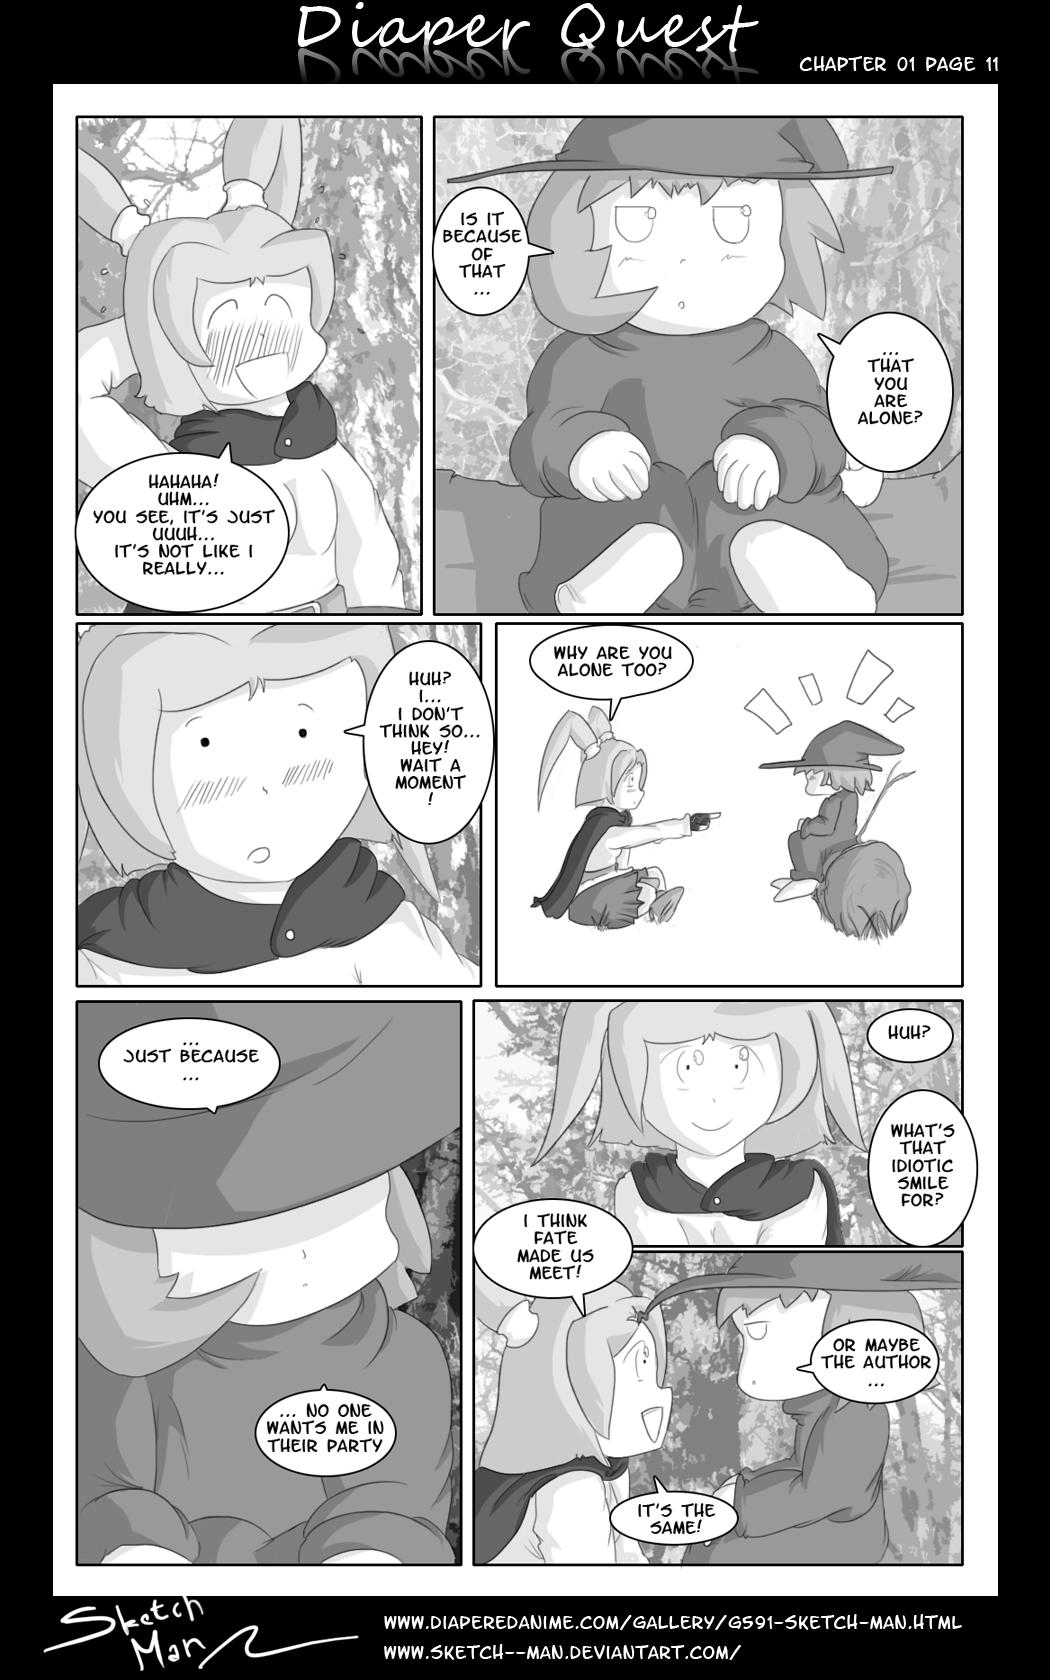 Cuck Sketch Man's Diaper Quest Complete Outdoor - Page 11